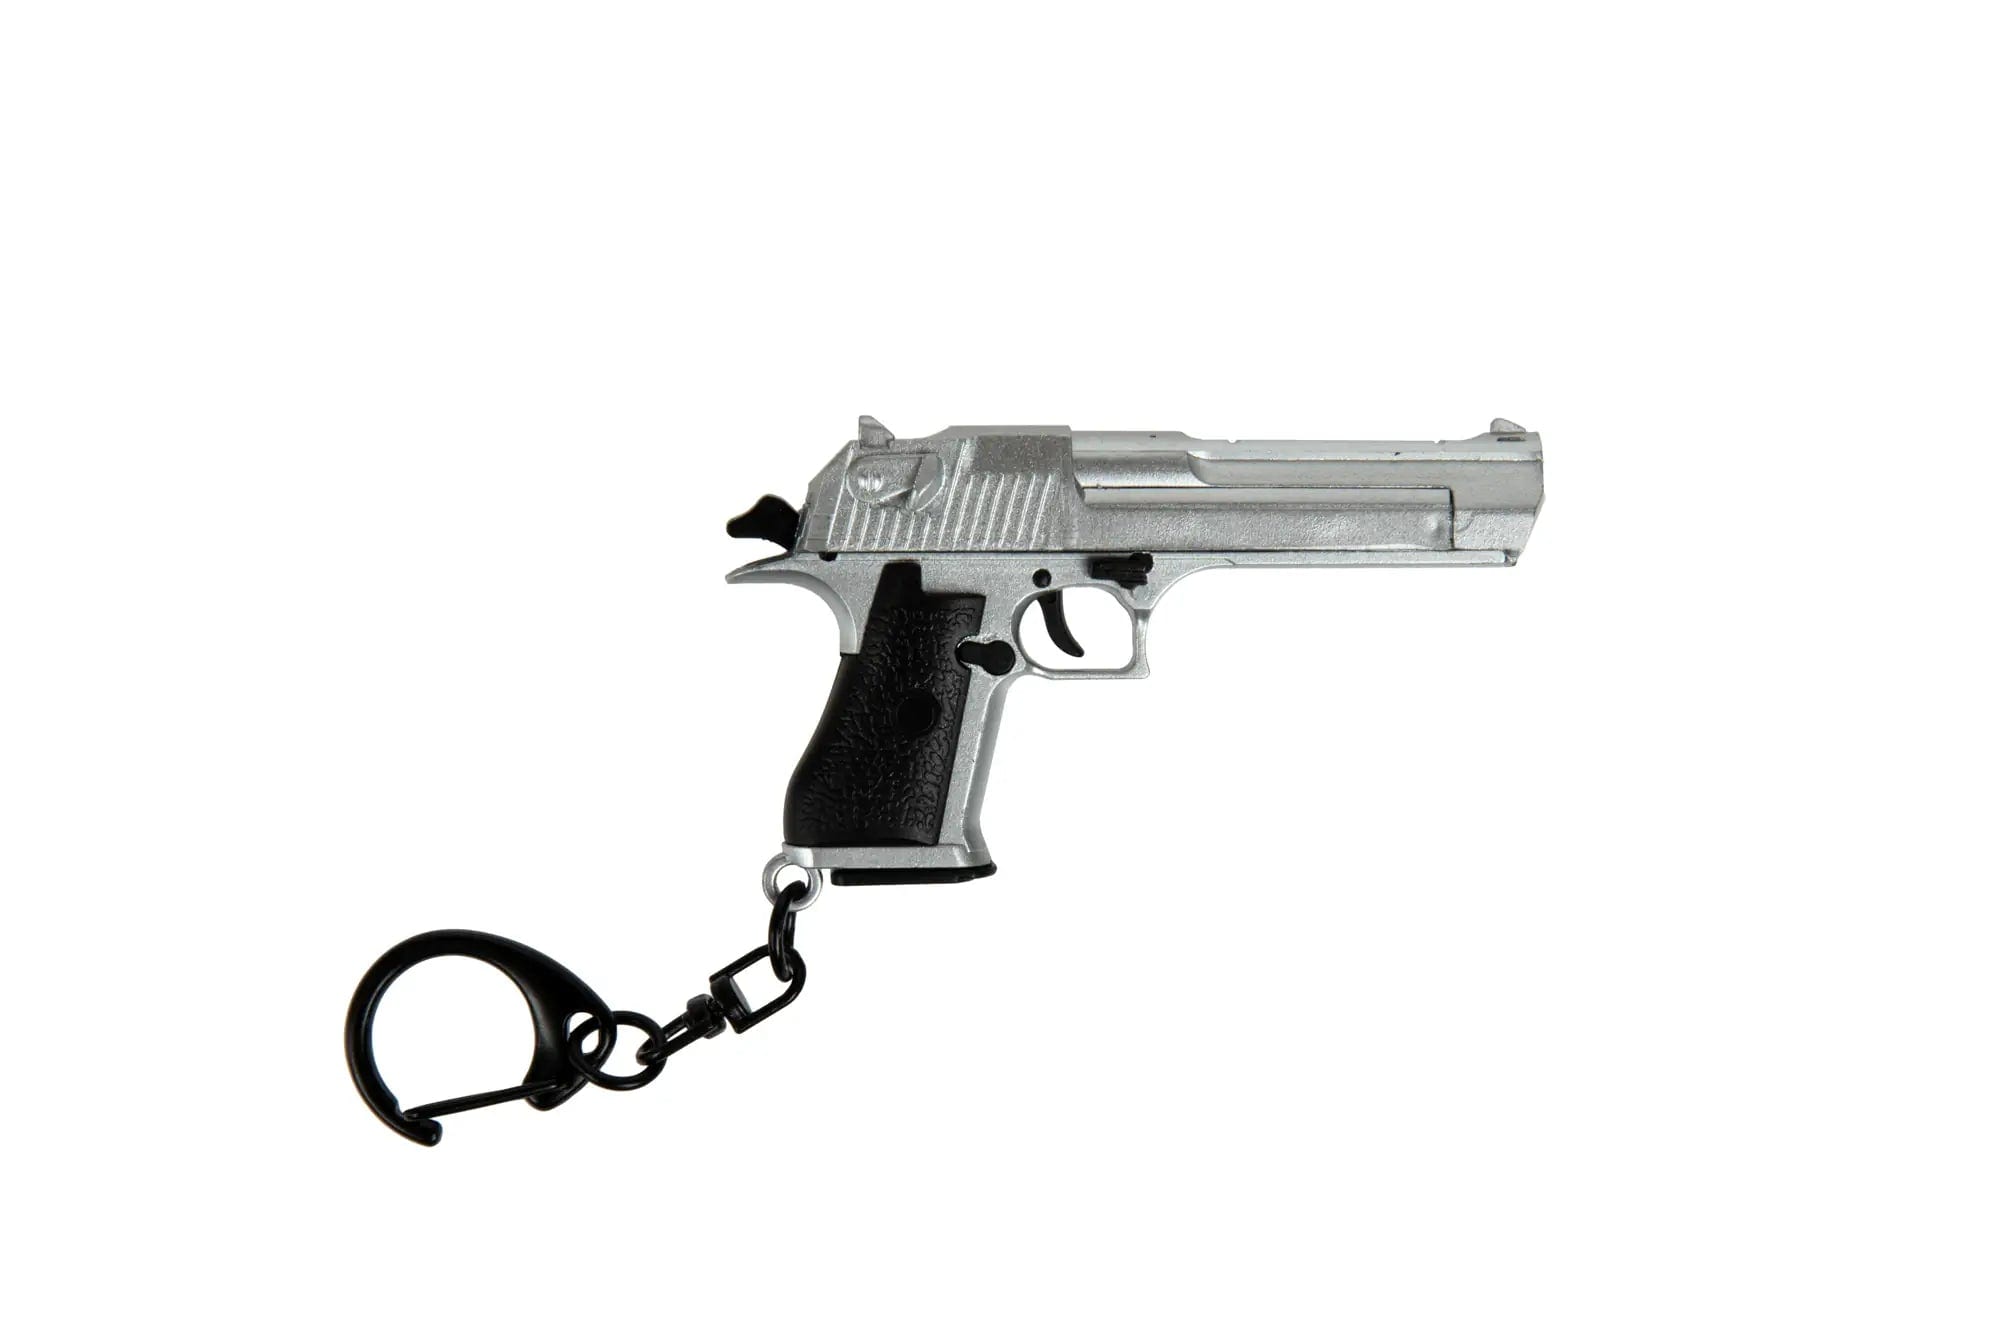 Pistol Keychain